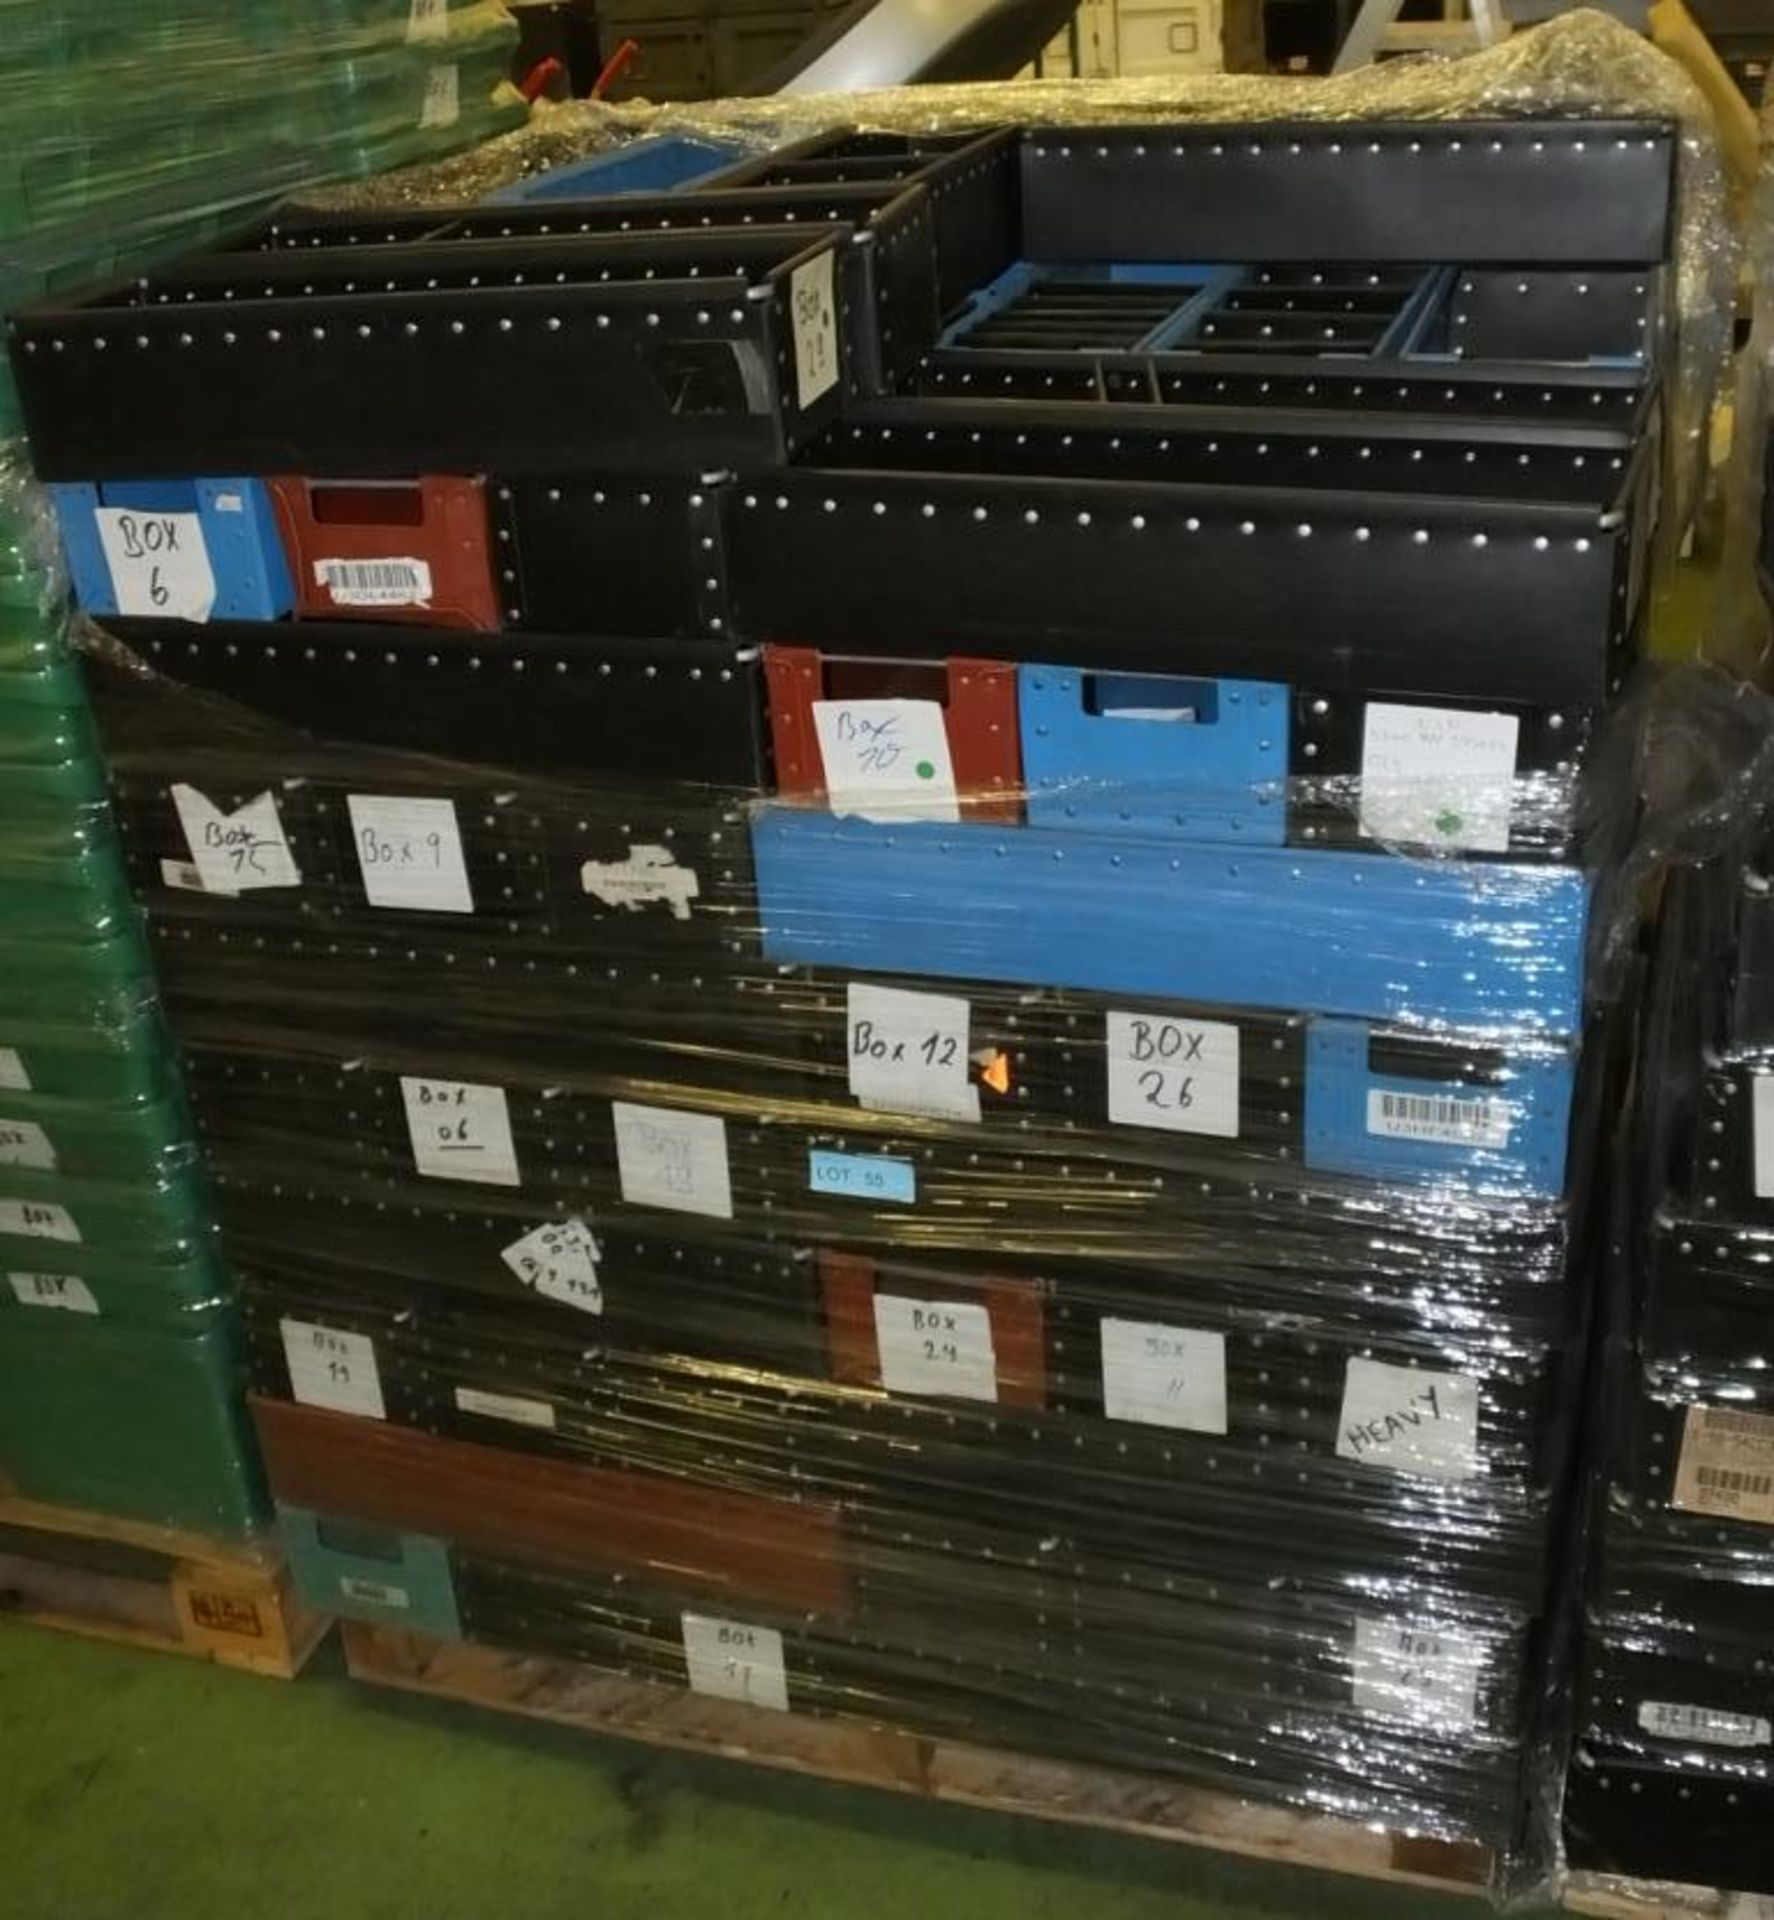 96x Fibreboard storage boxes / trays